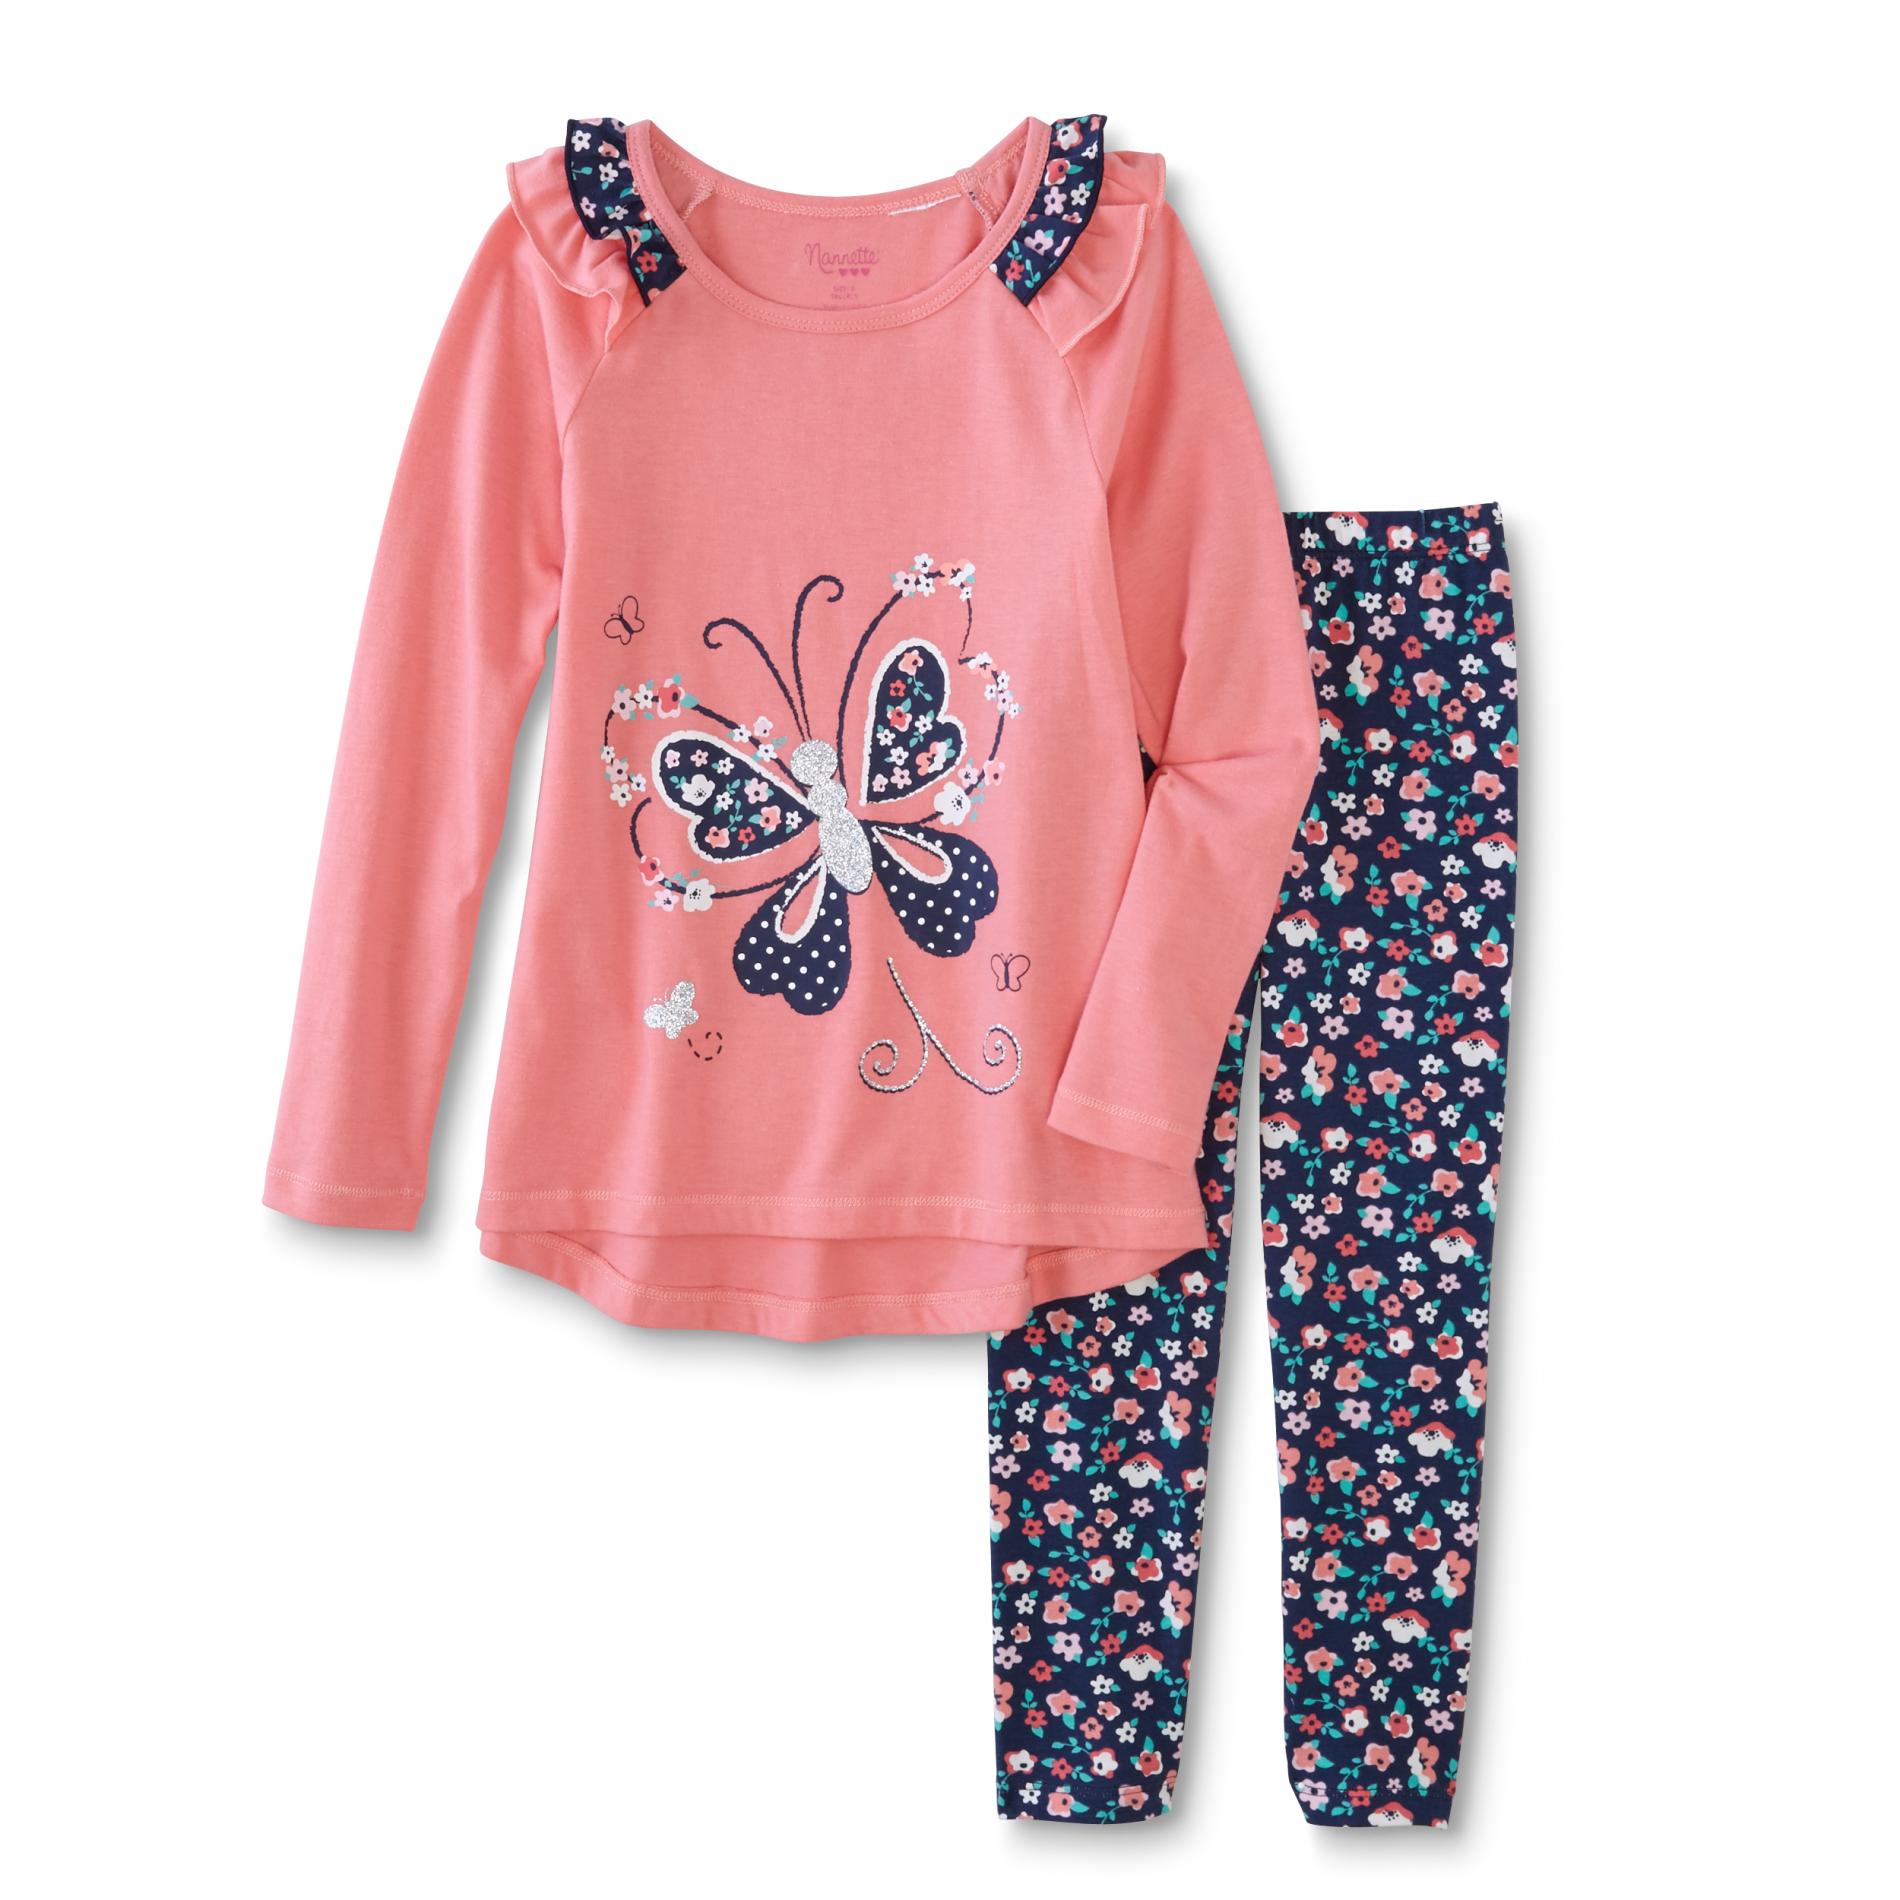 Nanette Girls' Graphic Top & Leggings - Butterflies & Floral